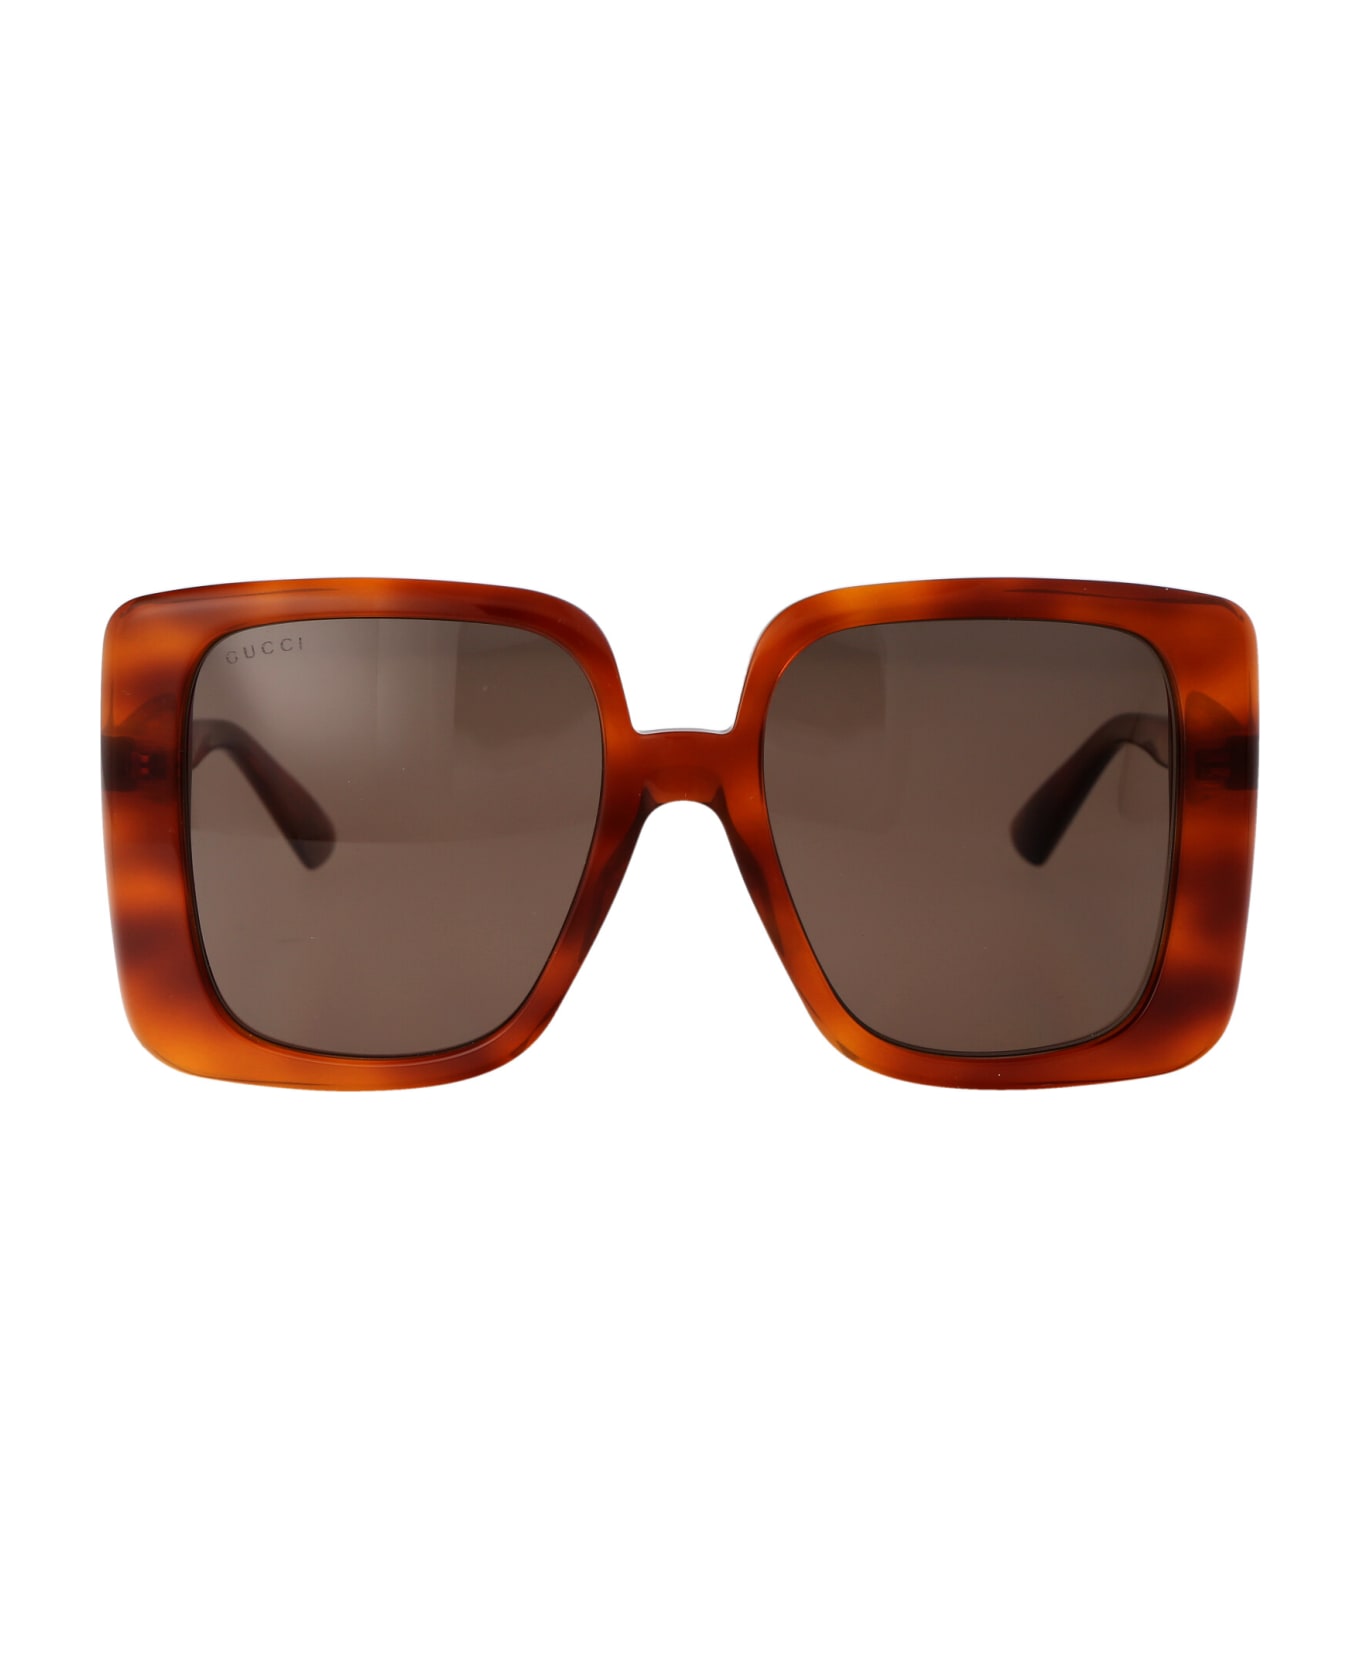 Gucci Eyewear Gg1314s Sunglasses - 002 HAVANA HAVANA BROWN